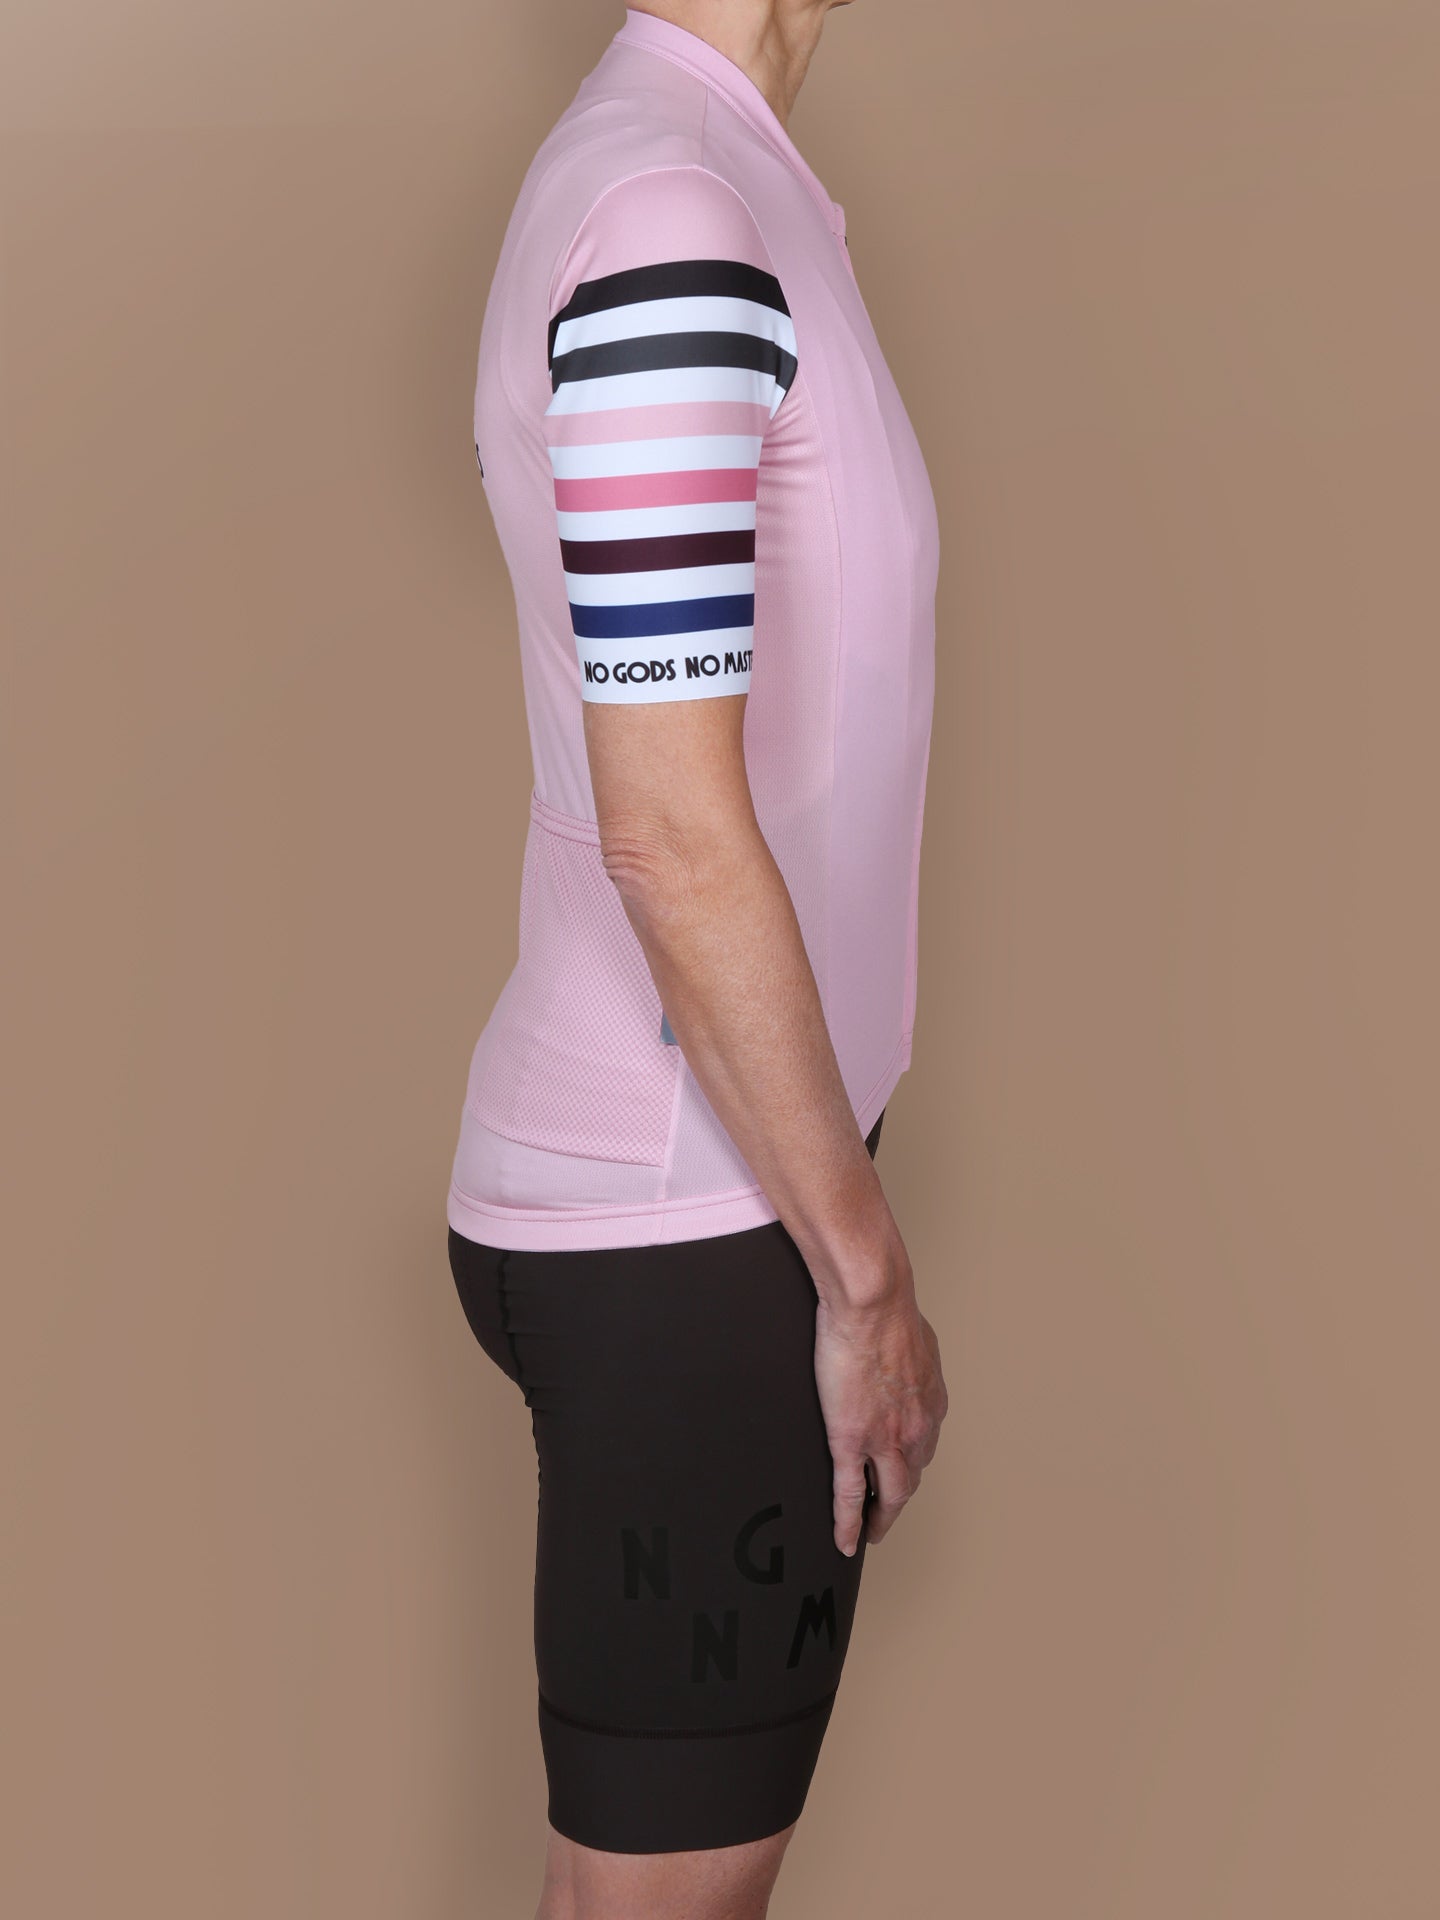 NGNM Stripes cycling jersey rose quartz sleeve no gods no masters logo multi-colour